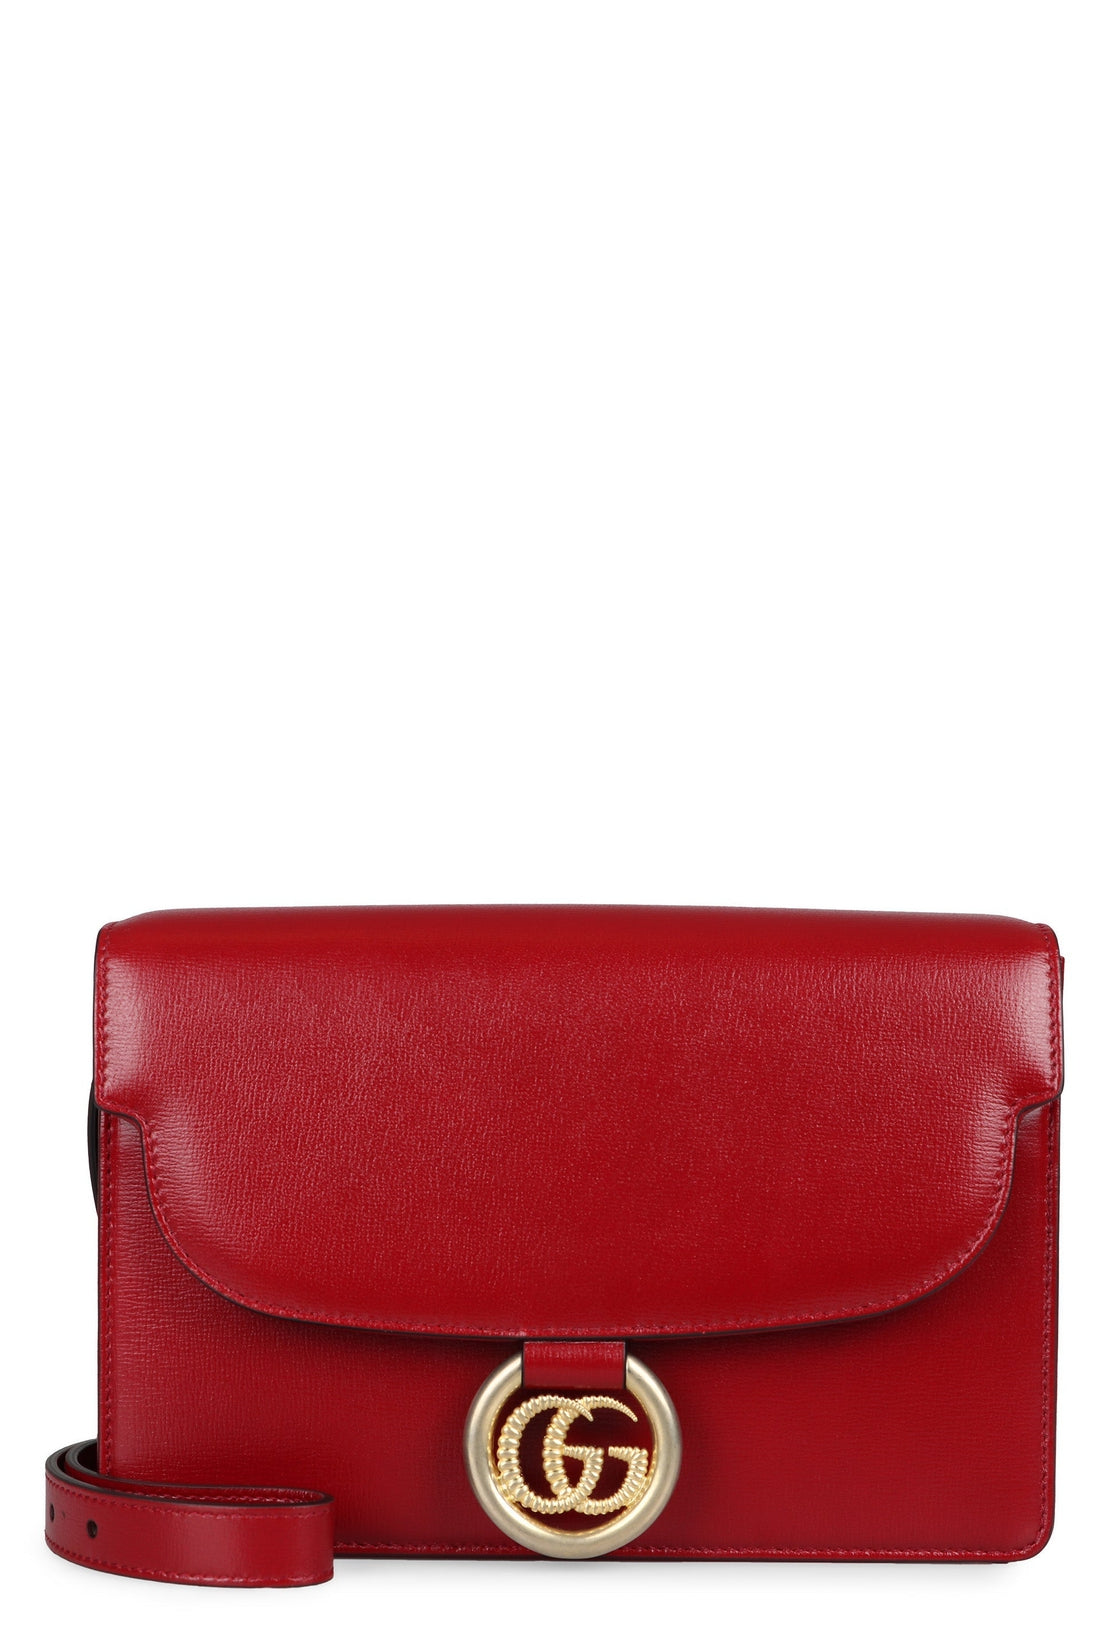 Gucci-OUTLET-SALE-GG Ring leather mini shoulder bag-ARCHIVIST